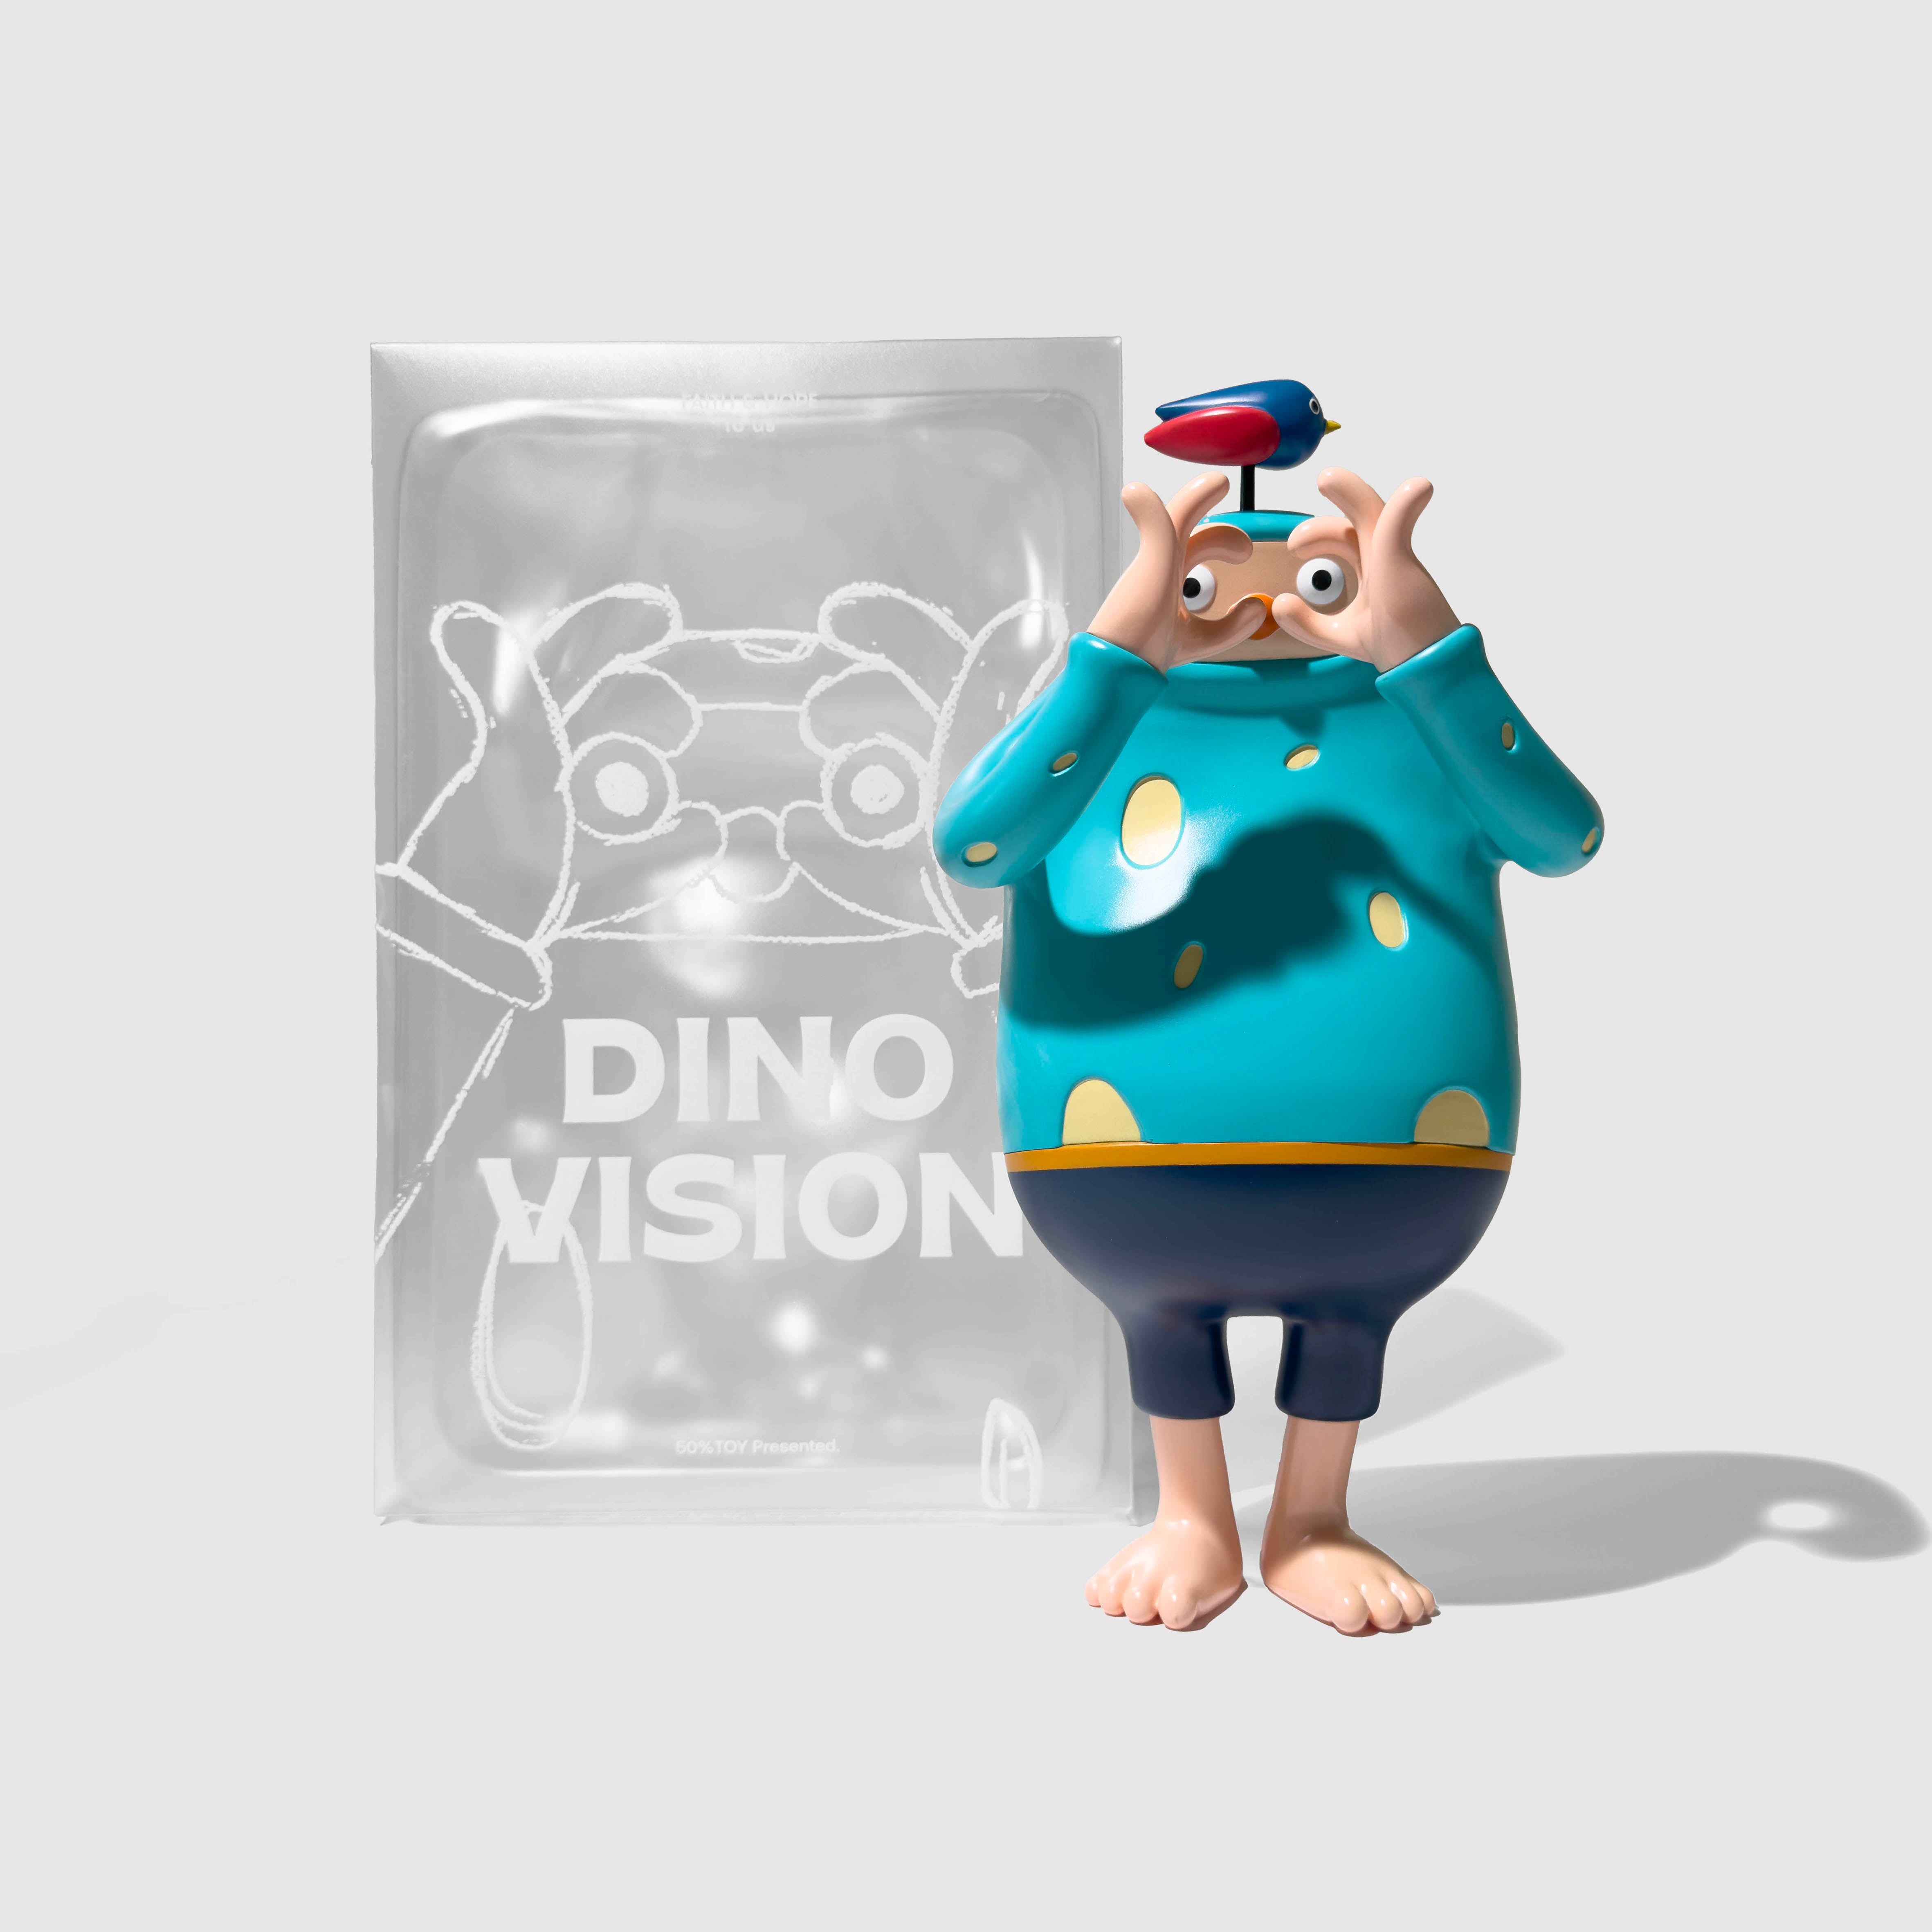 Dino "VISION"